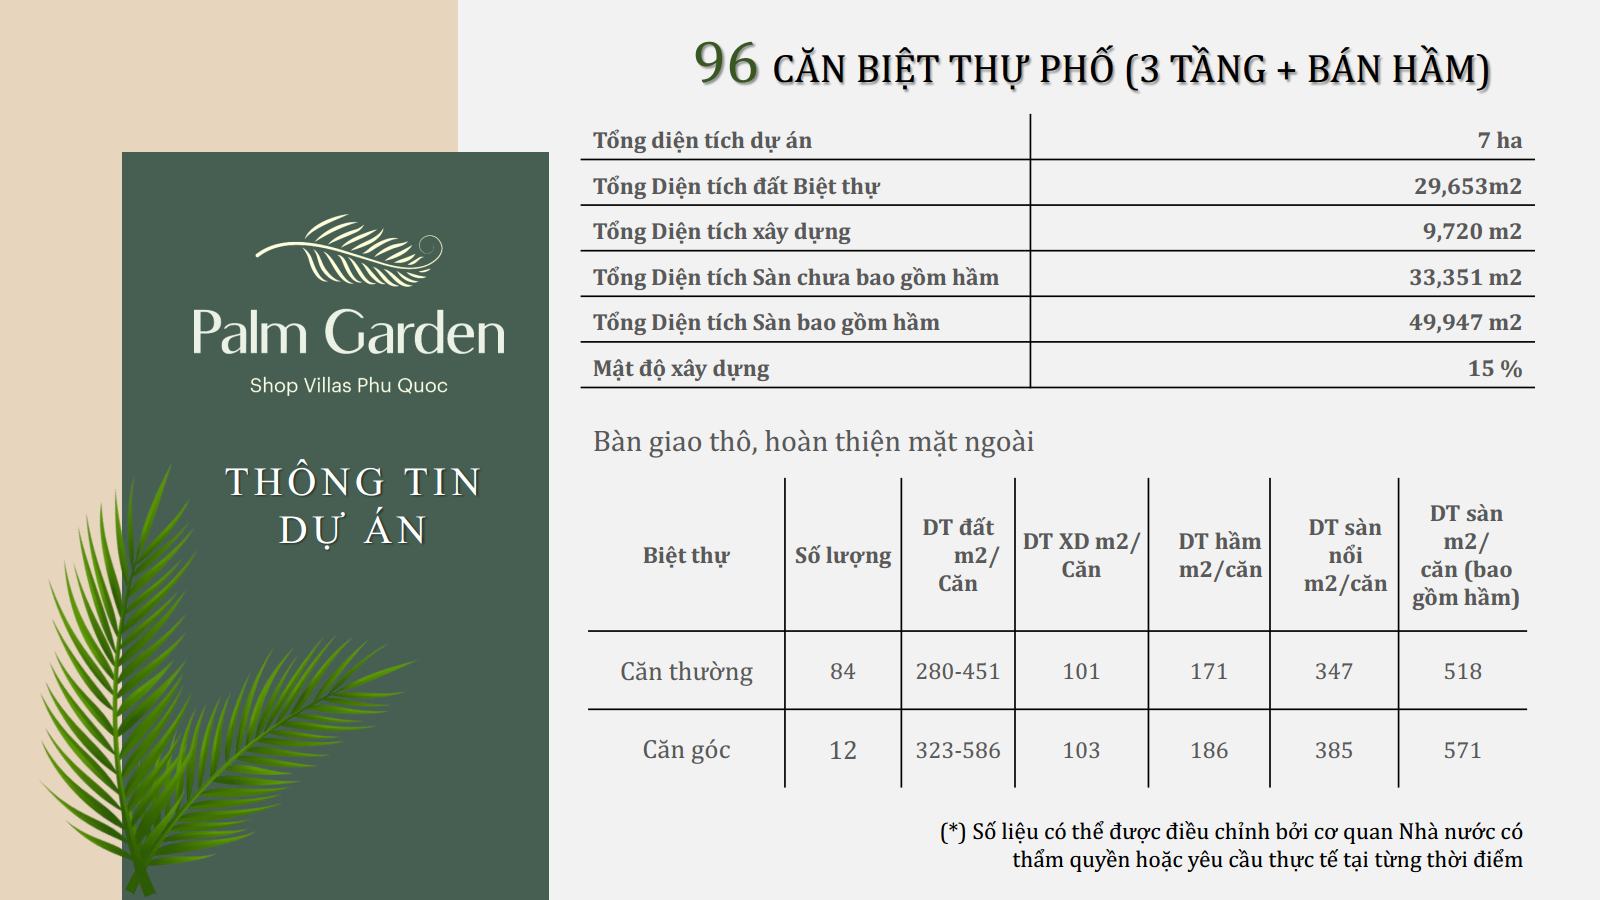 Palm Garden Shop Villas Phu Quoc